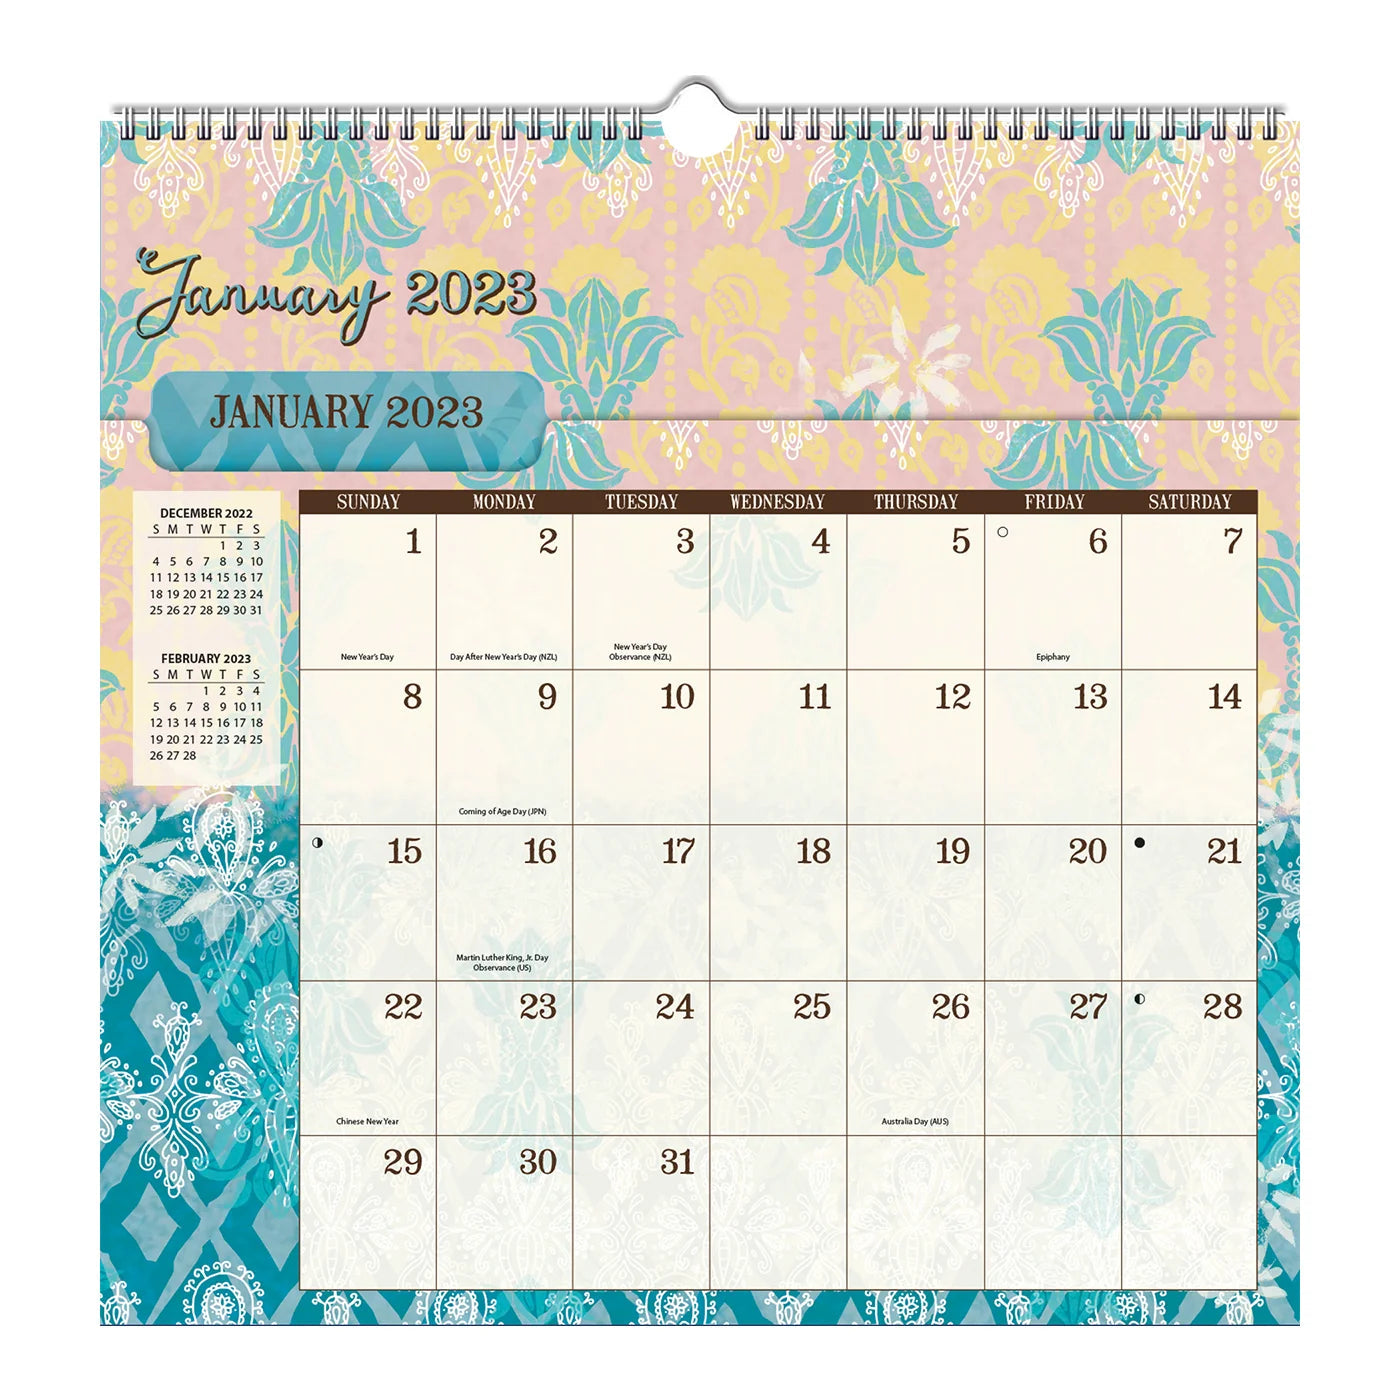 2023 LANG Bohemian by Susan Winget - File-It Square Wall Calendar